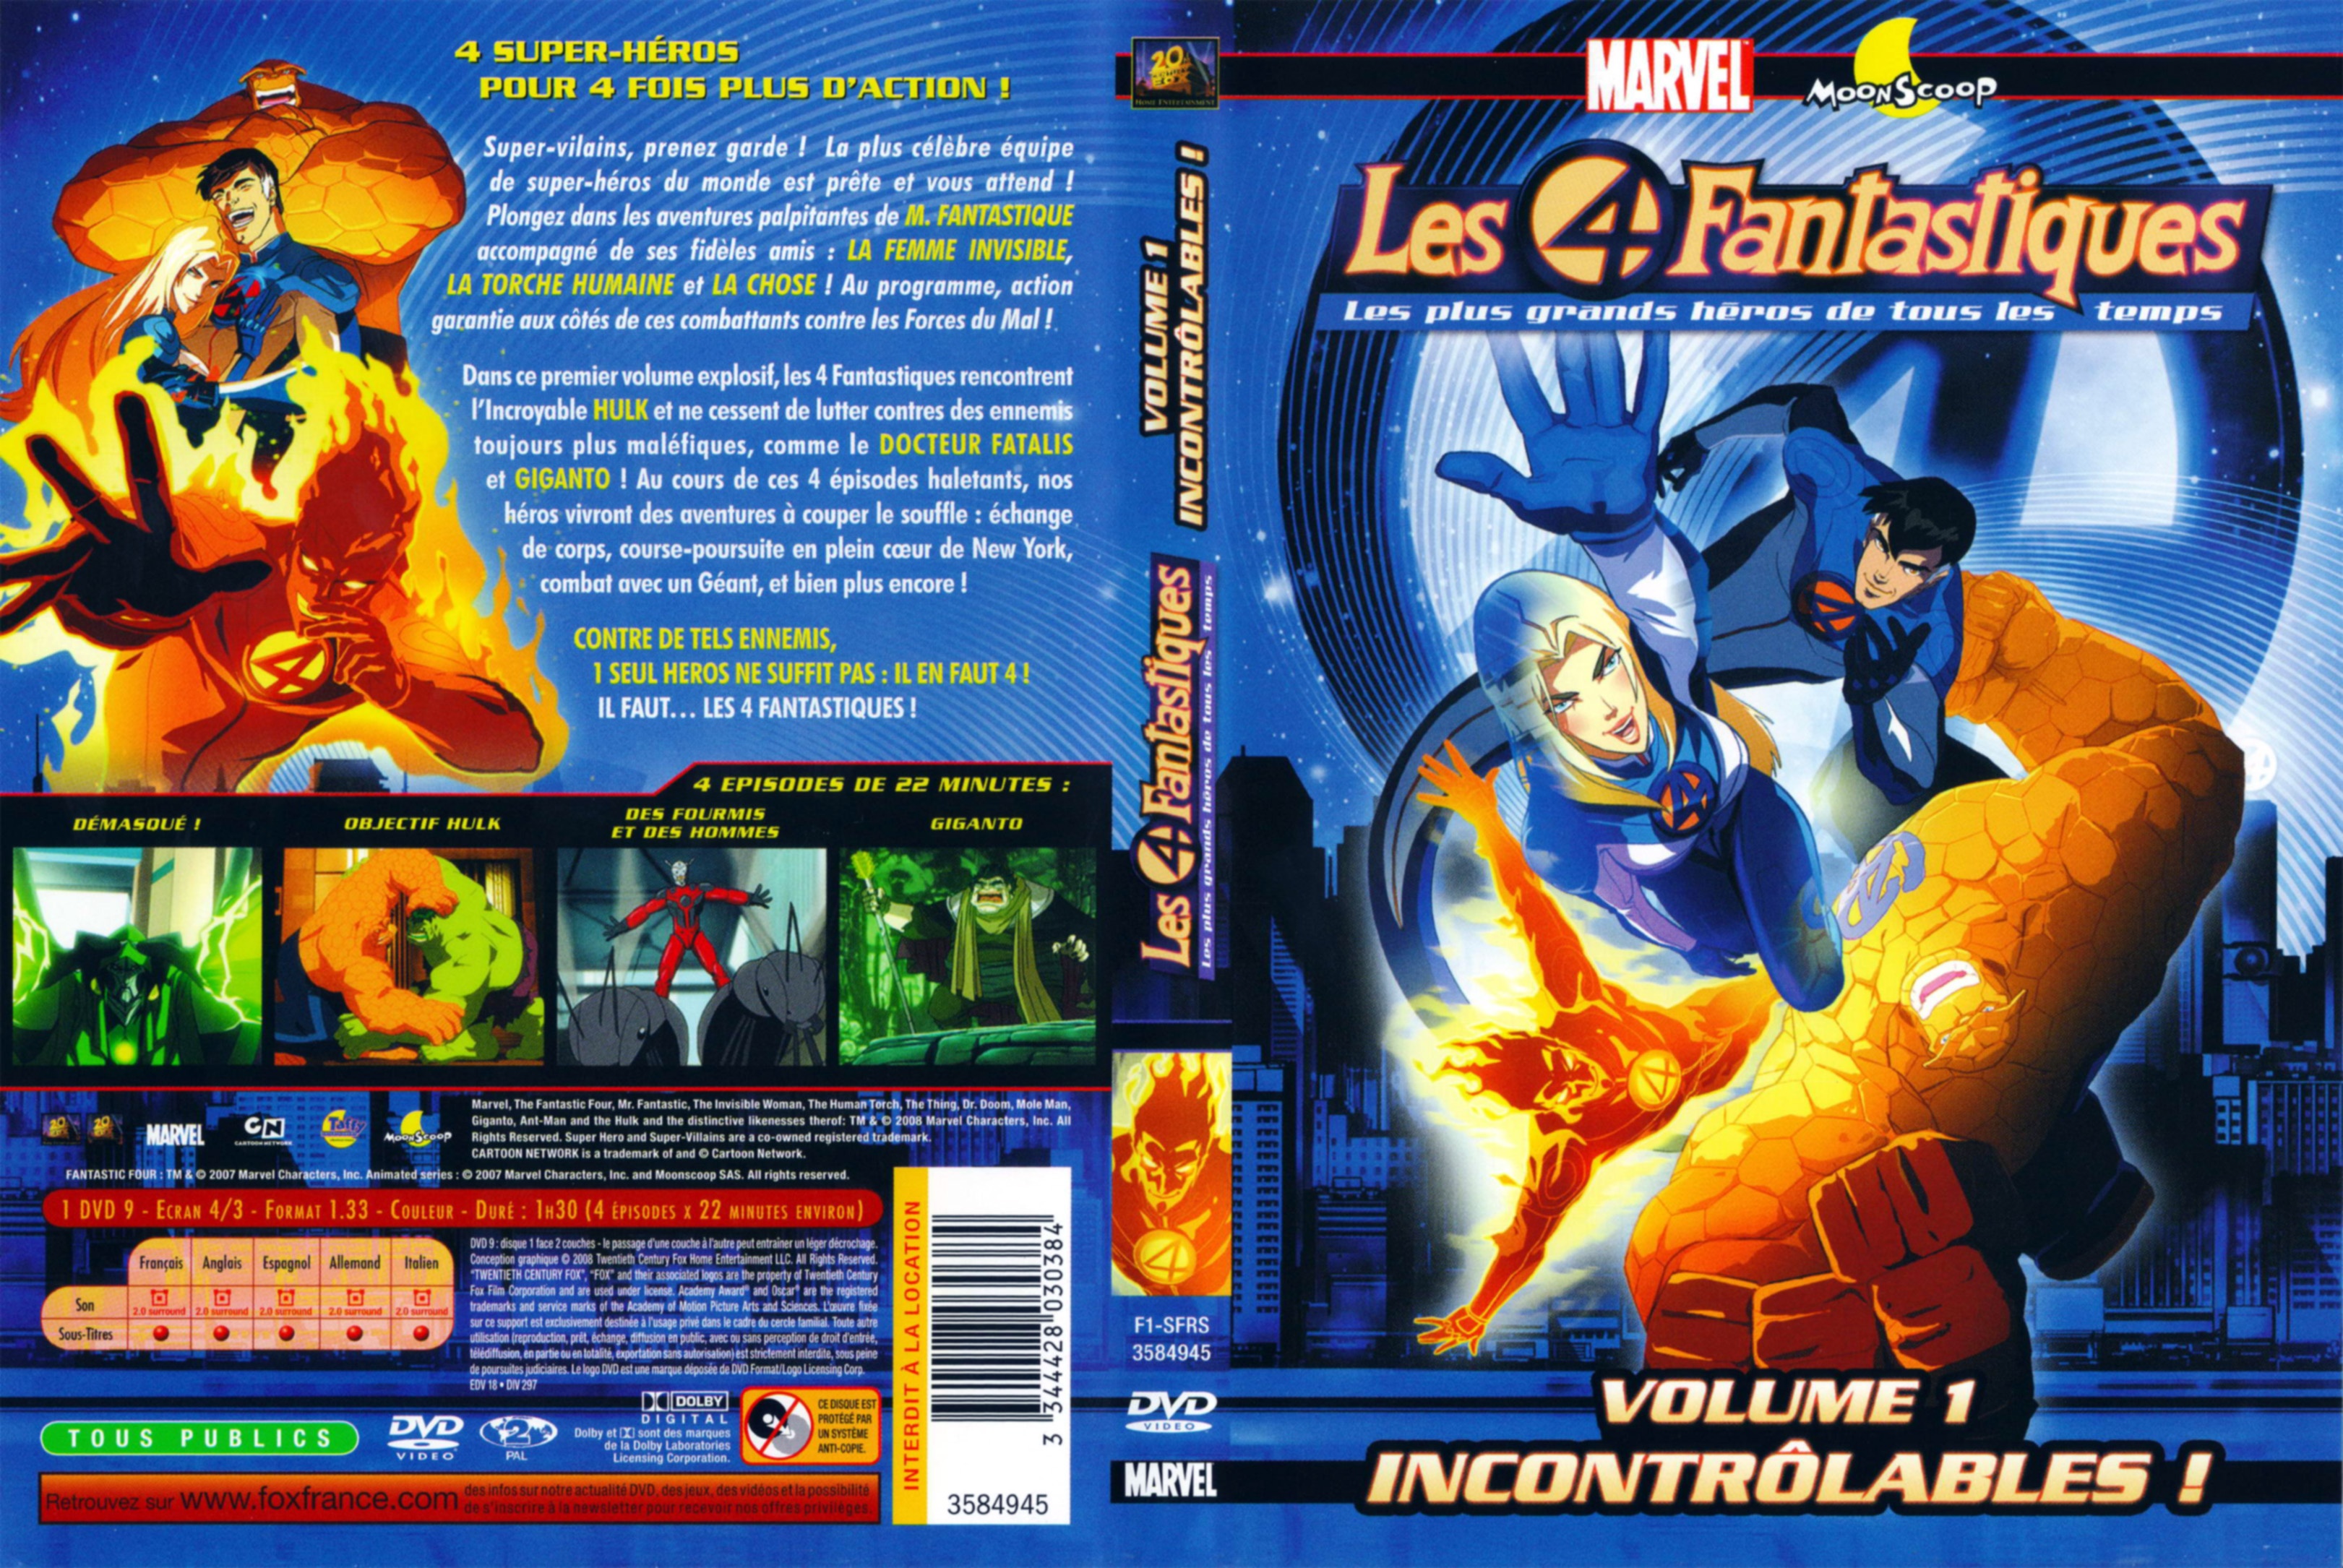 Jaquette DVD Les 4 fantastiques vol 1 - Incontrolables